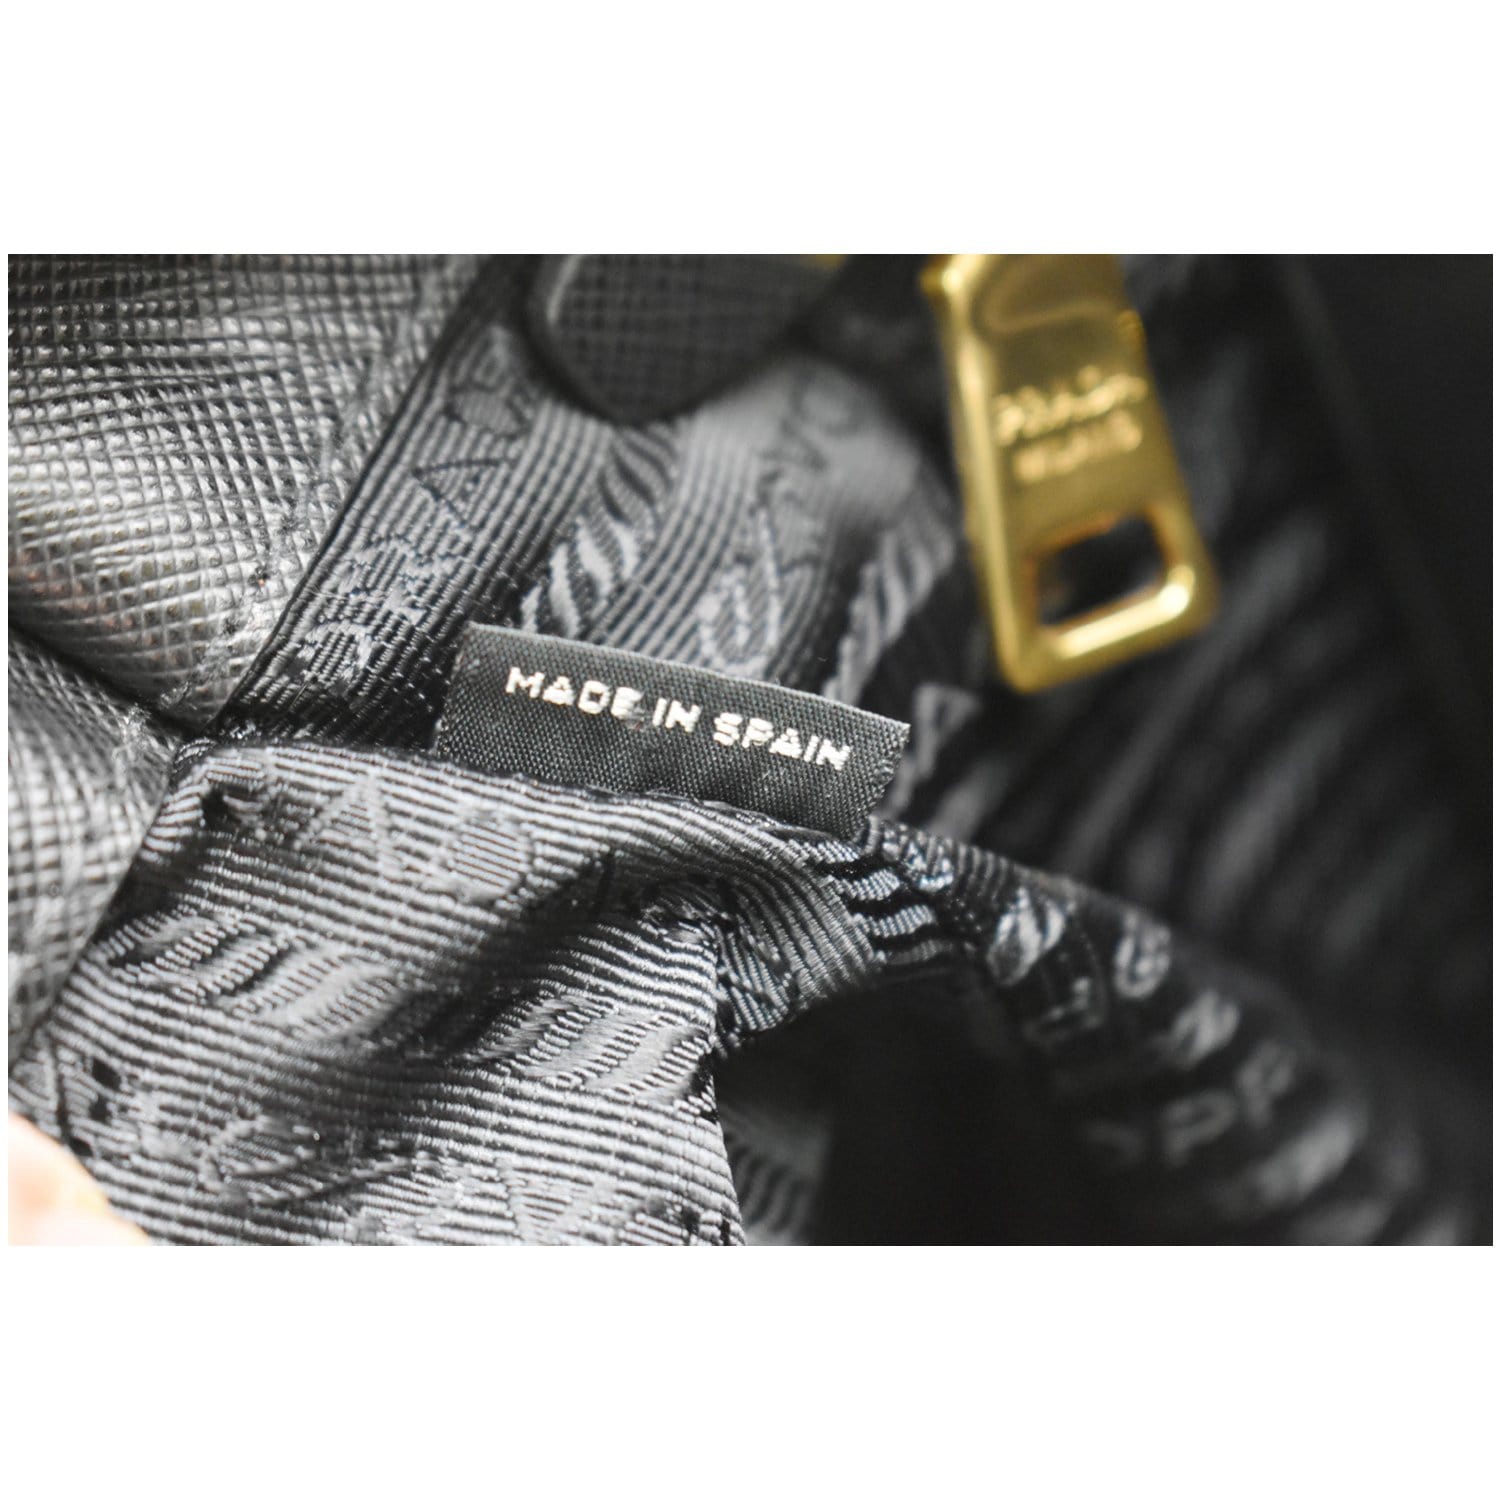 Shop PRADA GALLERIA Classic Saffiano Leather Prada Galleria bag 44